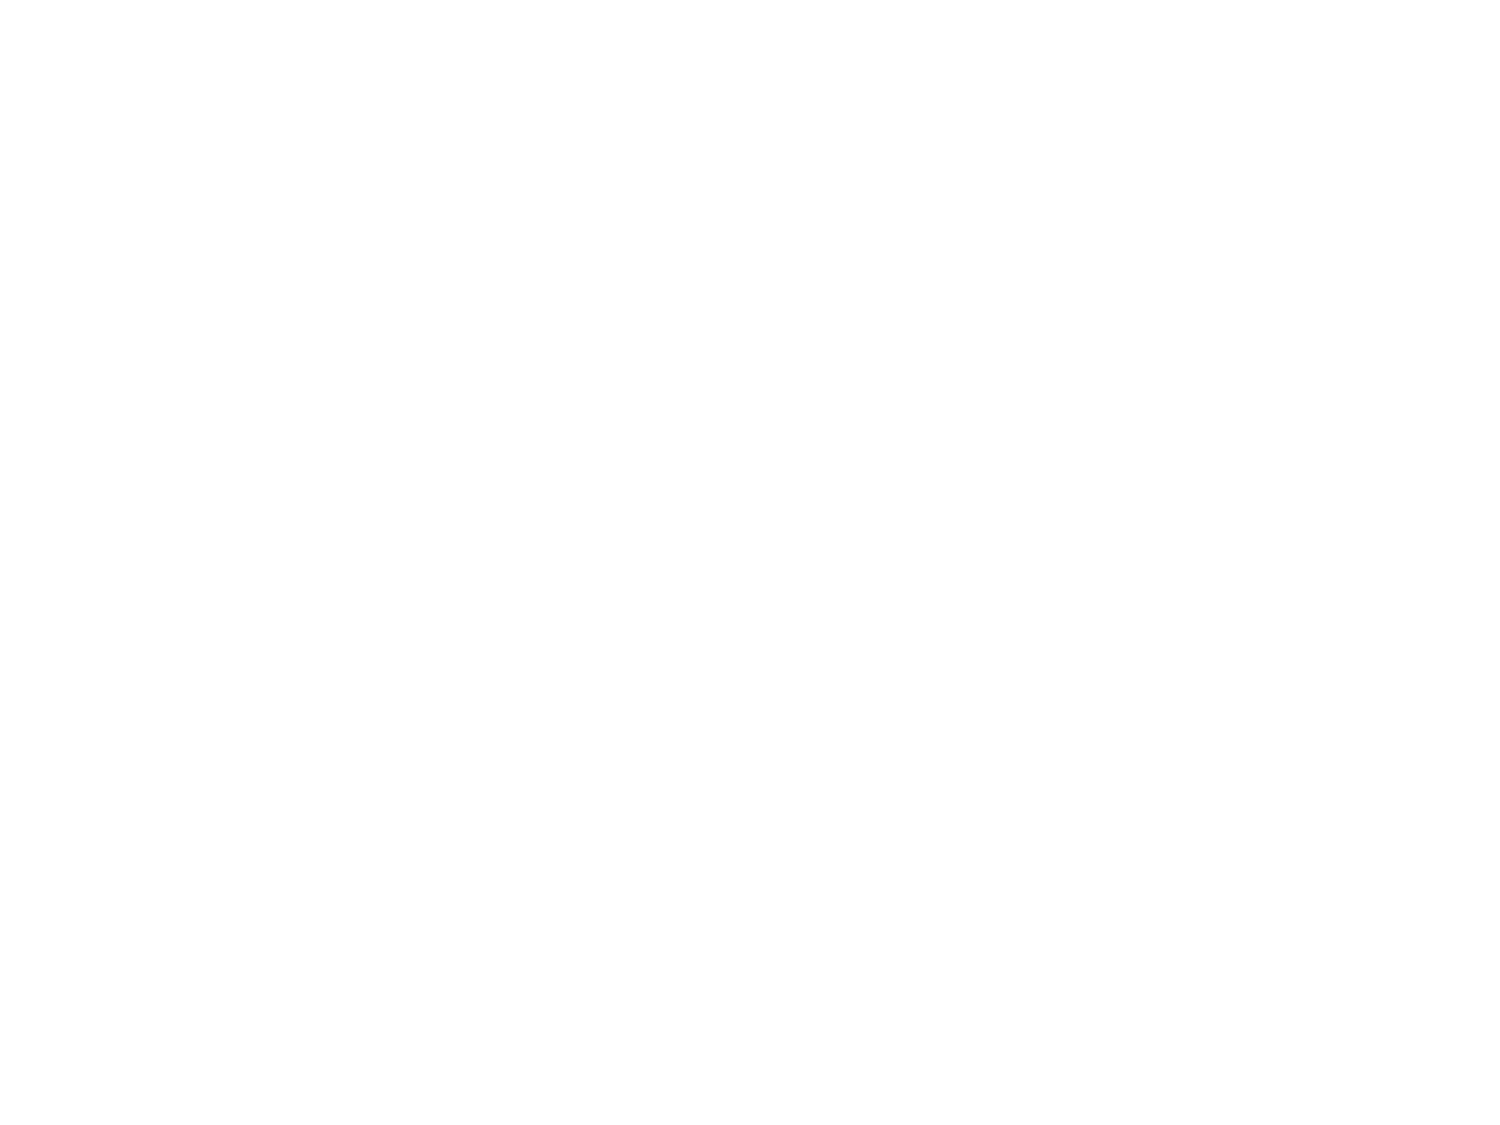 J JACKMAN PHOTOGRAPHY